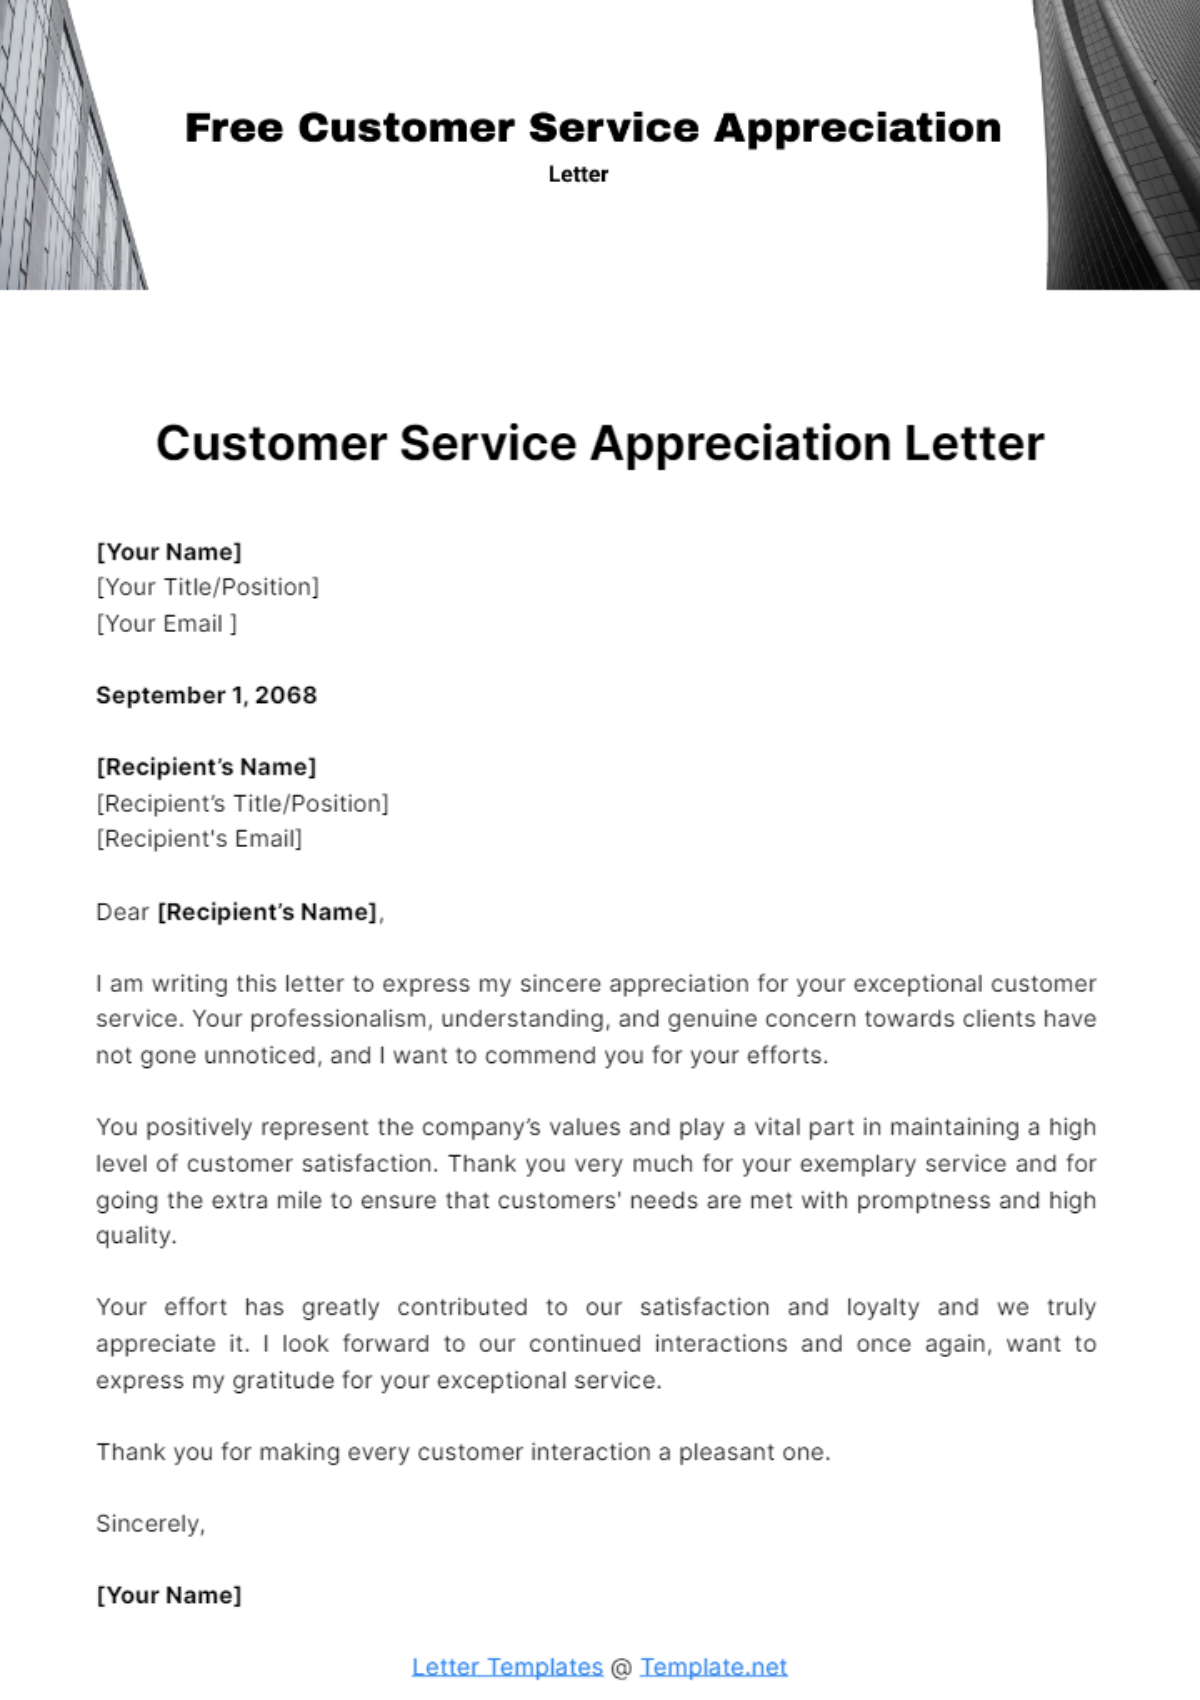 Free Customer Service Appreciation Letter Template